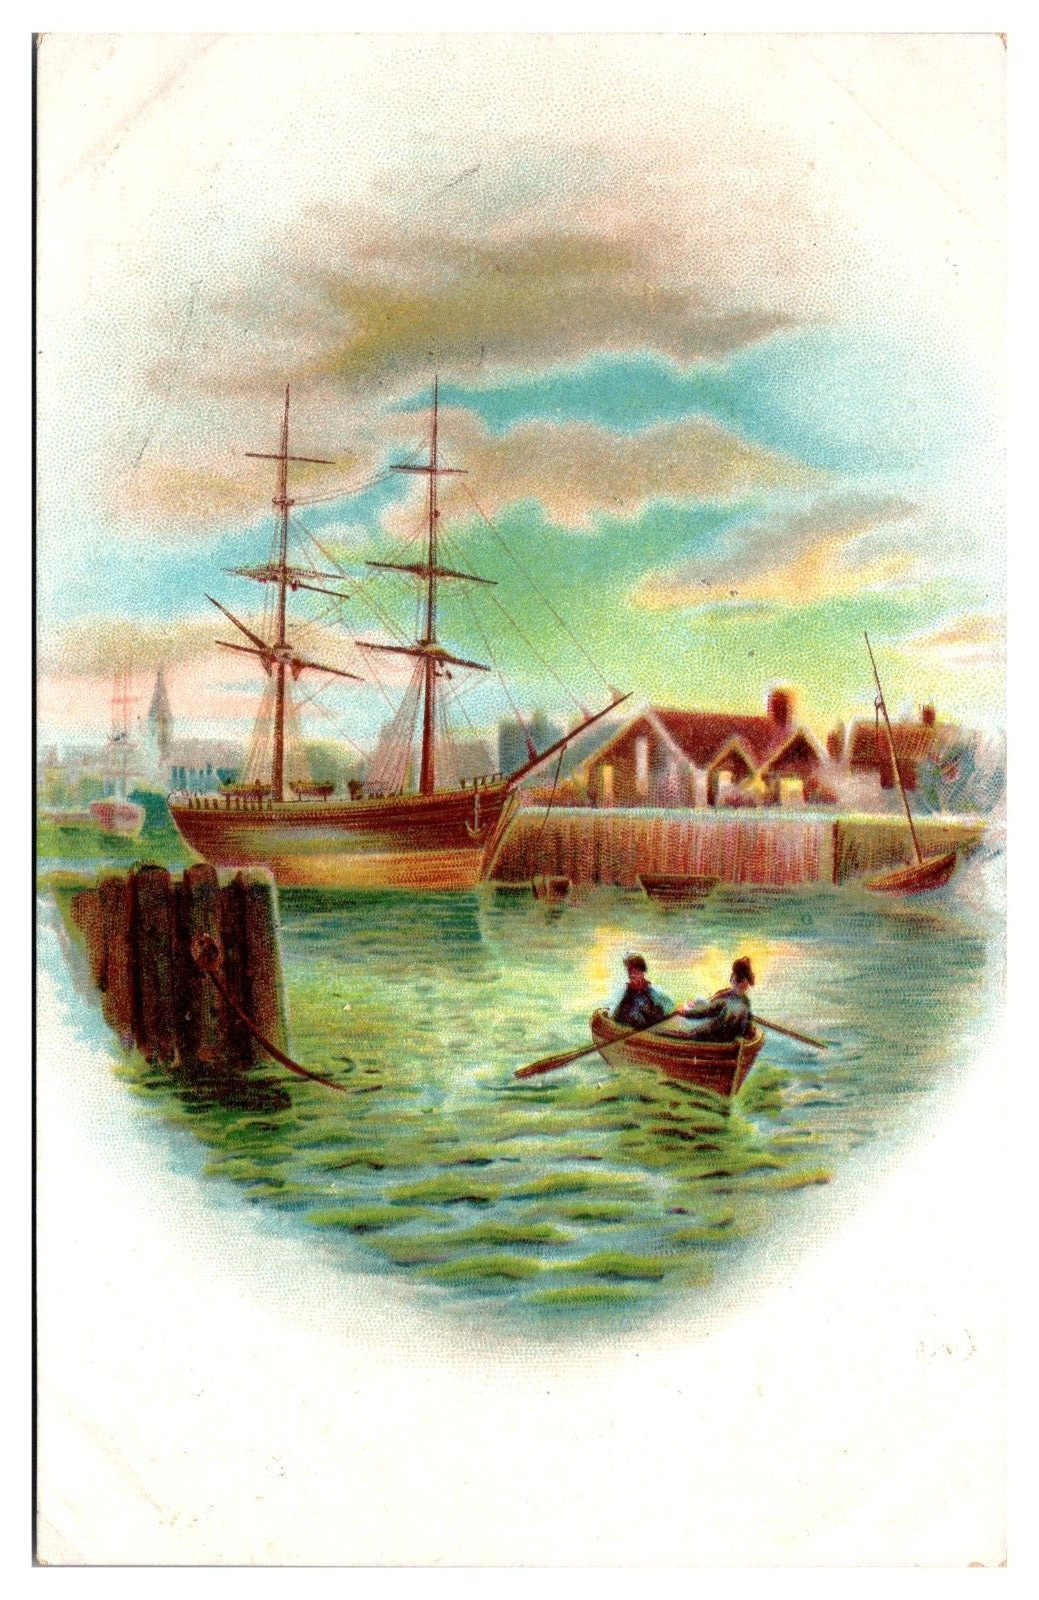 Antique Fleischmann's Compressed Yeast Advertising Card, Boat Scene on Front